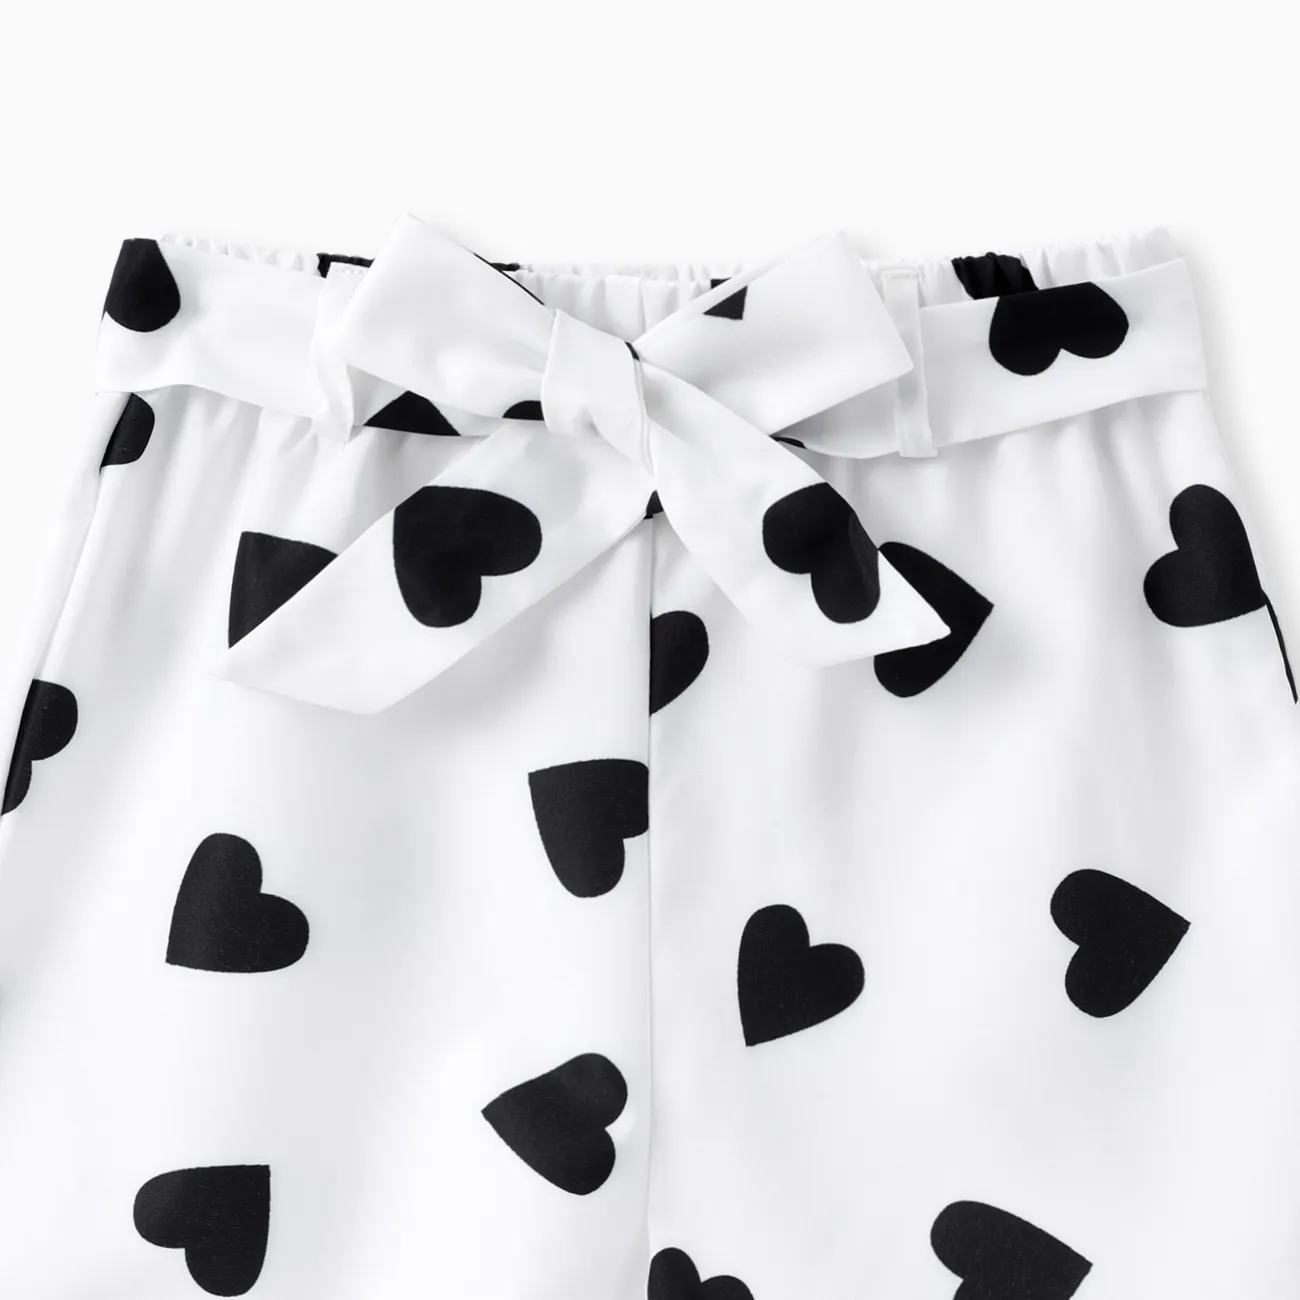 2pcs Kid Girl Flutter-sleeve Tee and Heart Print Belted Shorts Set Black big image 1